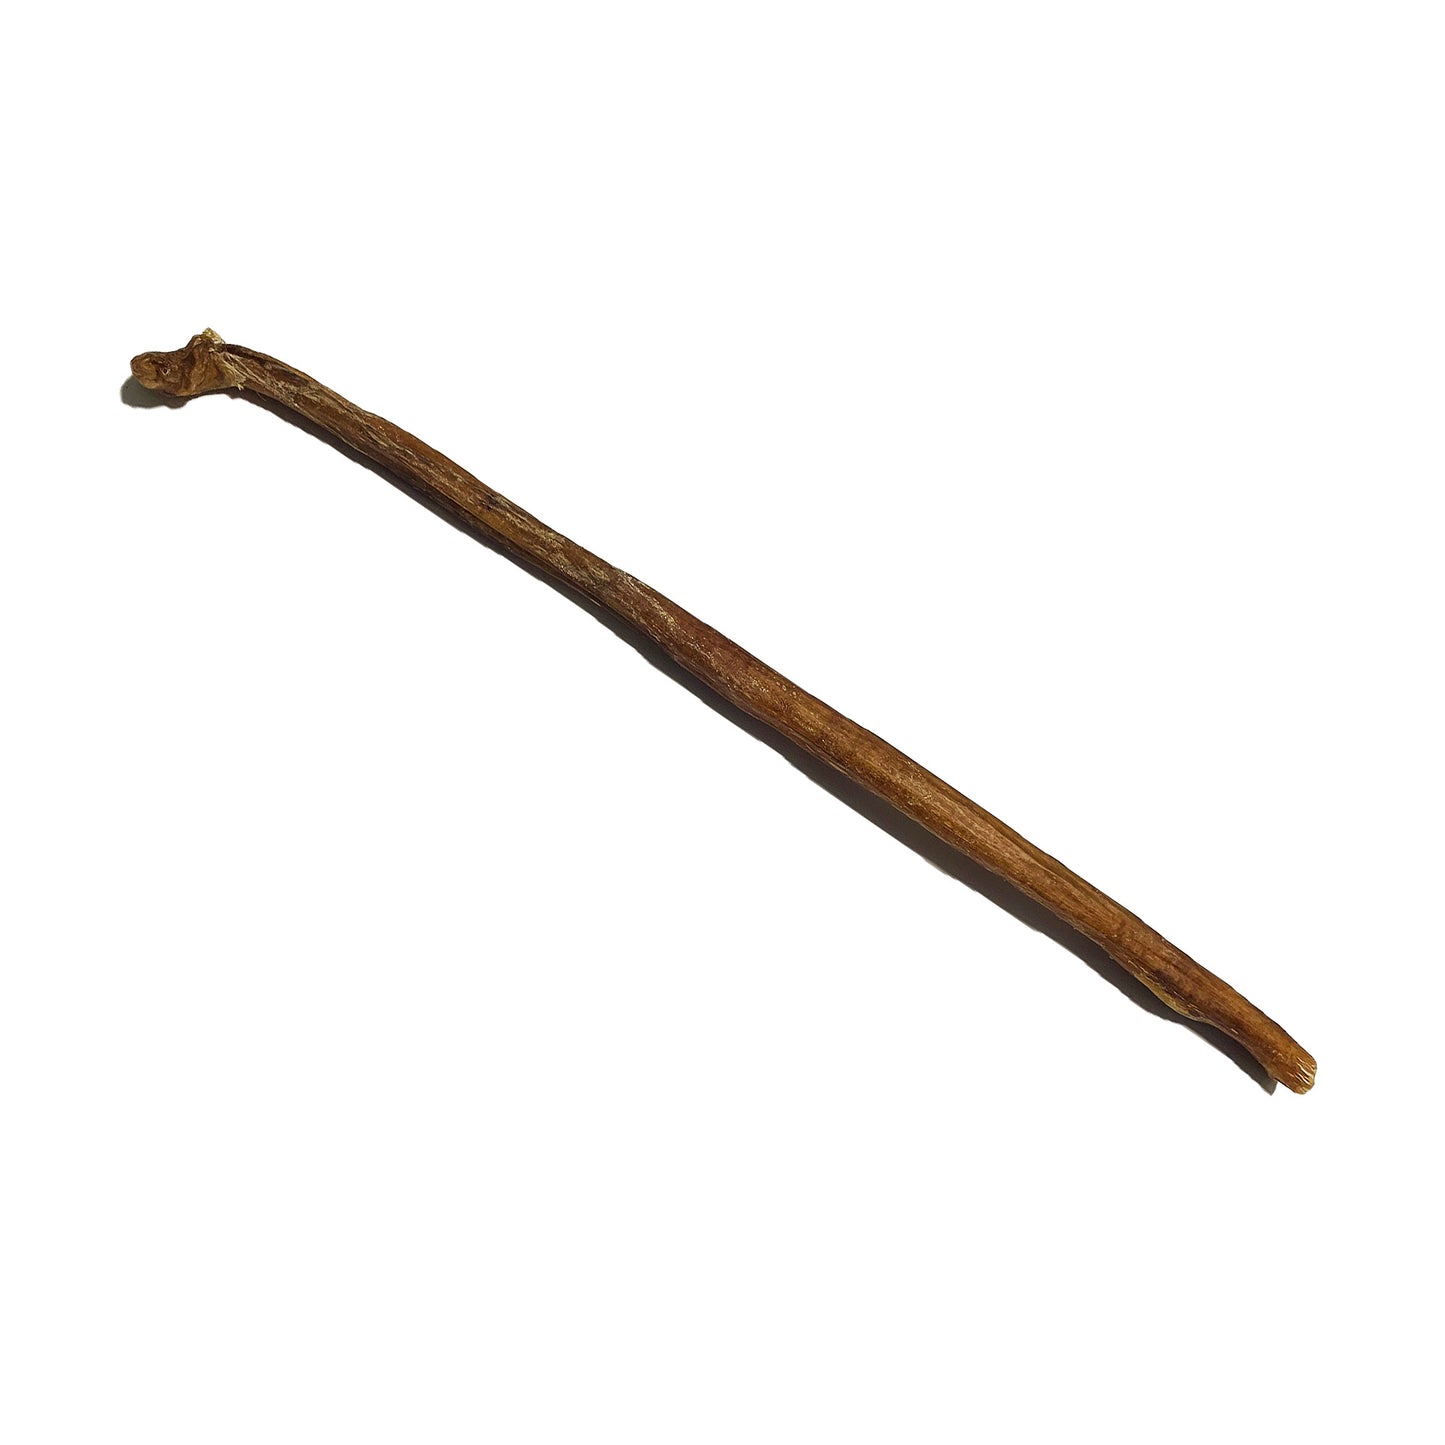 Gullet stick - 30-40cm